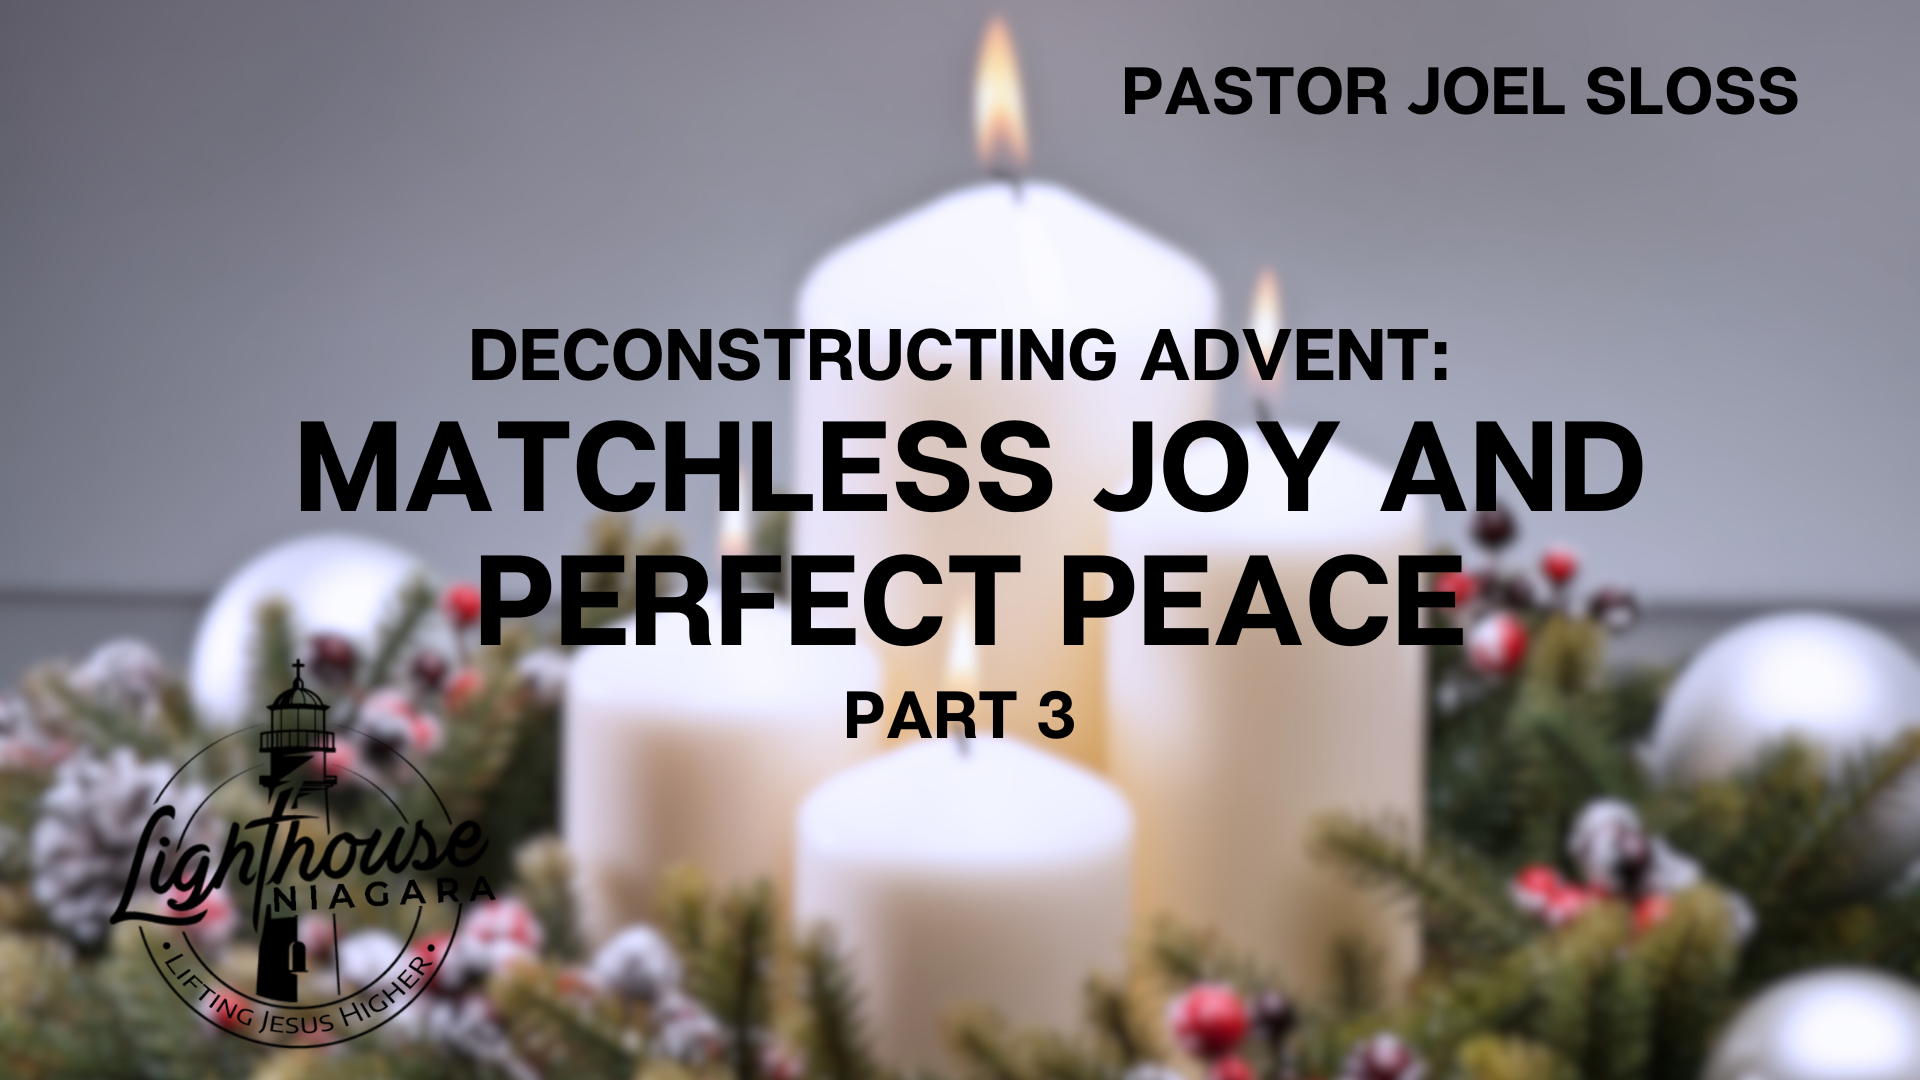 Deconstructing Advent: Matchless Joy and Perfect Peace - Pastor Joel Sloss